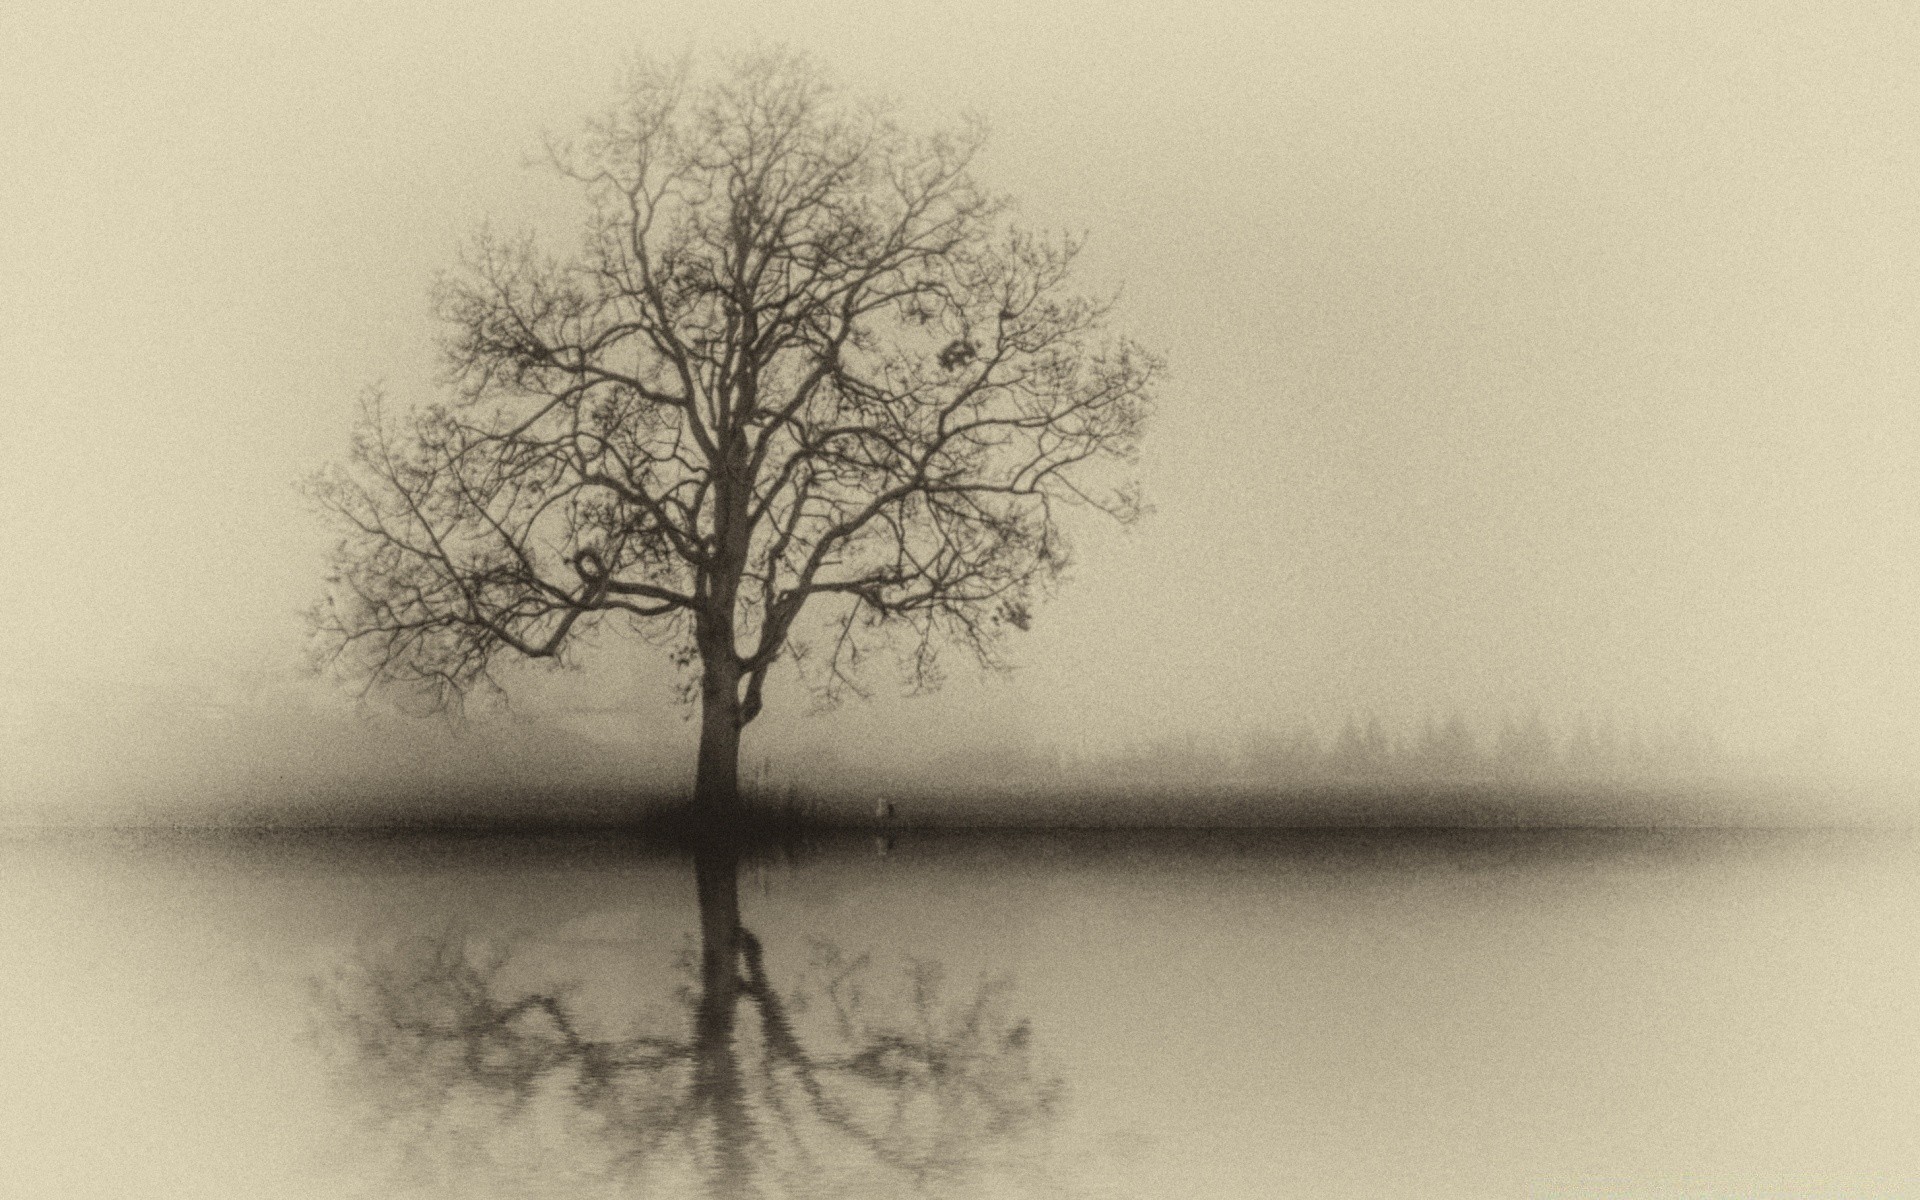 vintage fog tree landscape mist wood alone nature oak branch weather dawn silhouette winter solitude